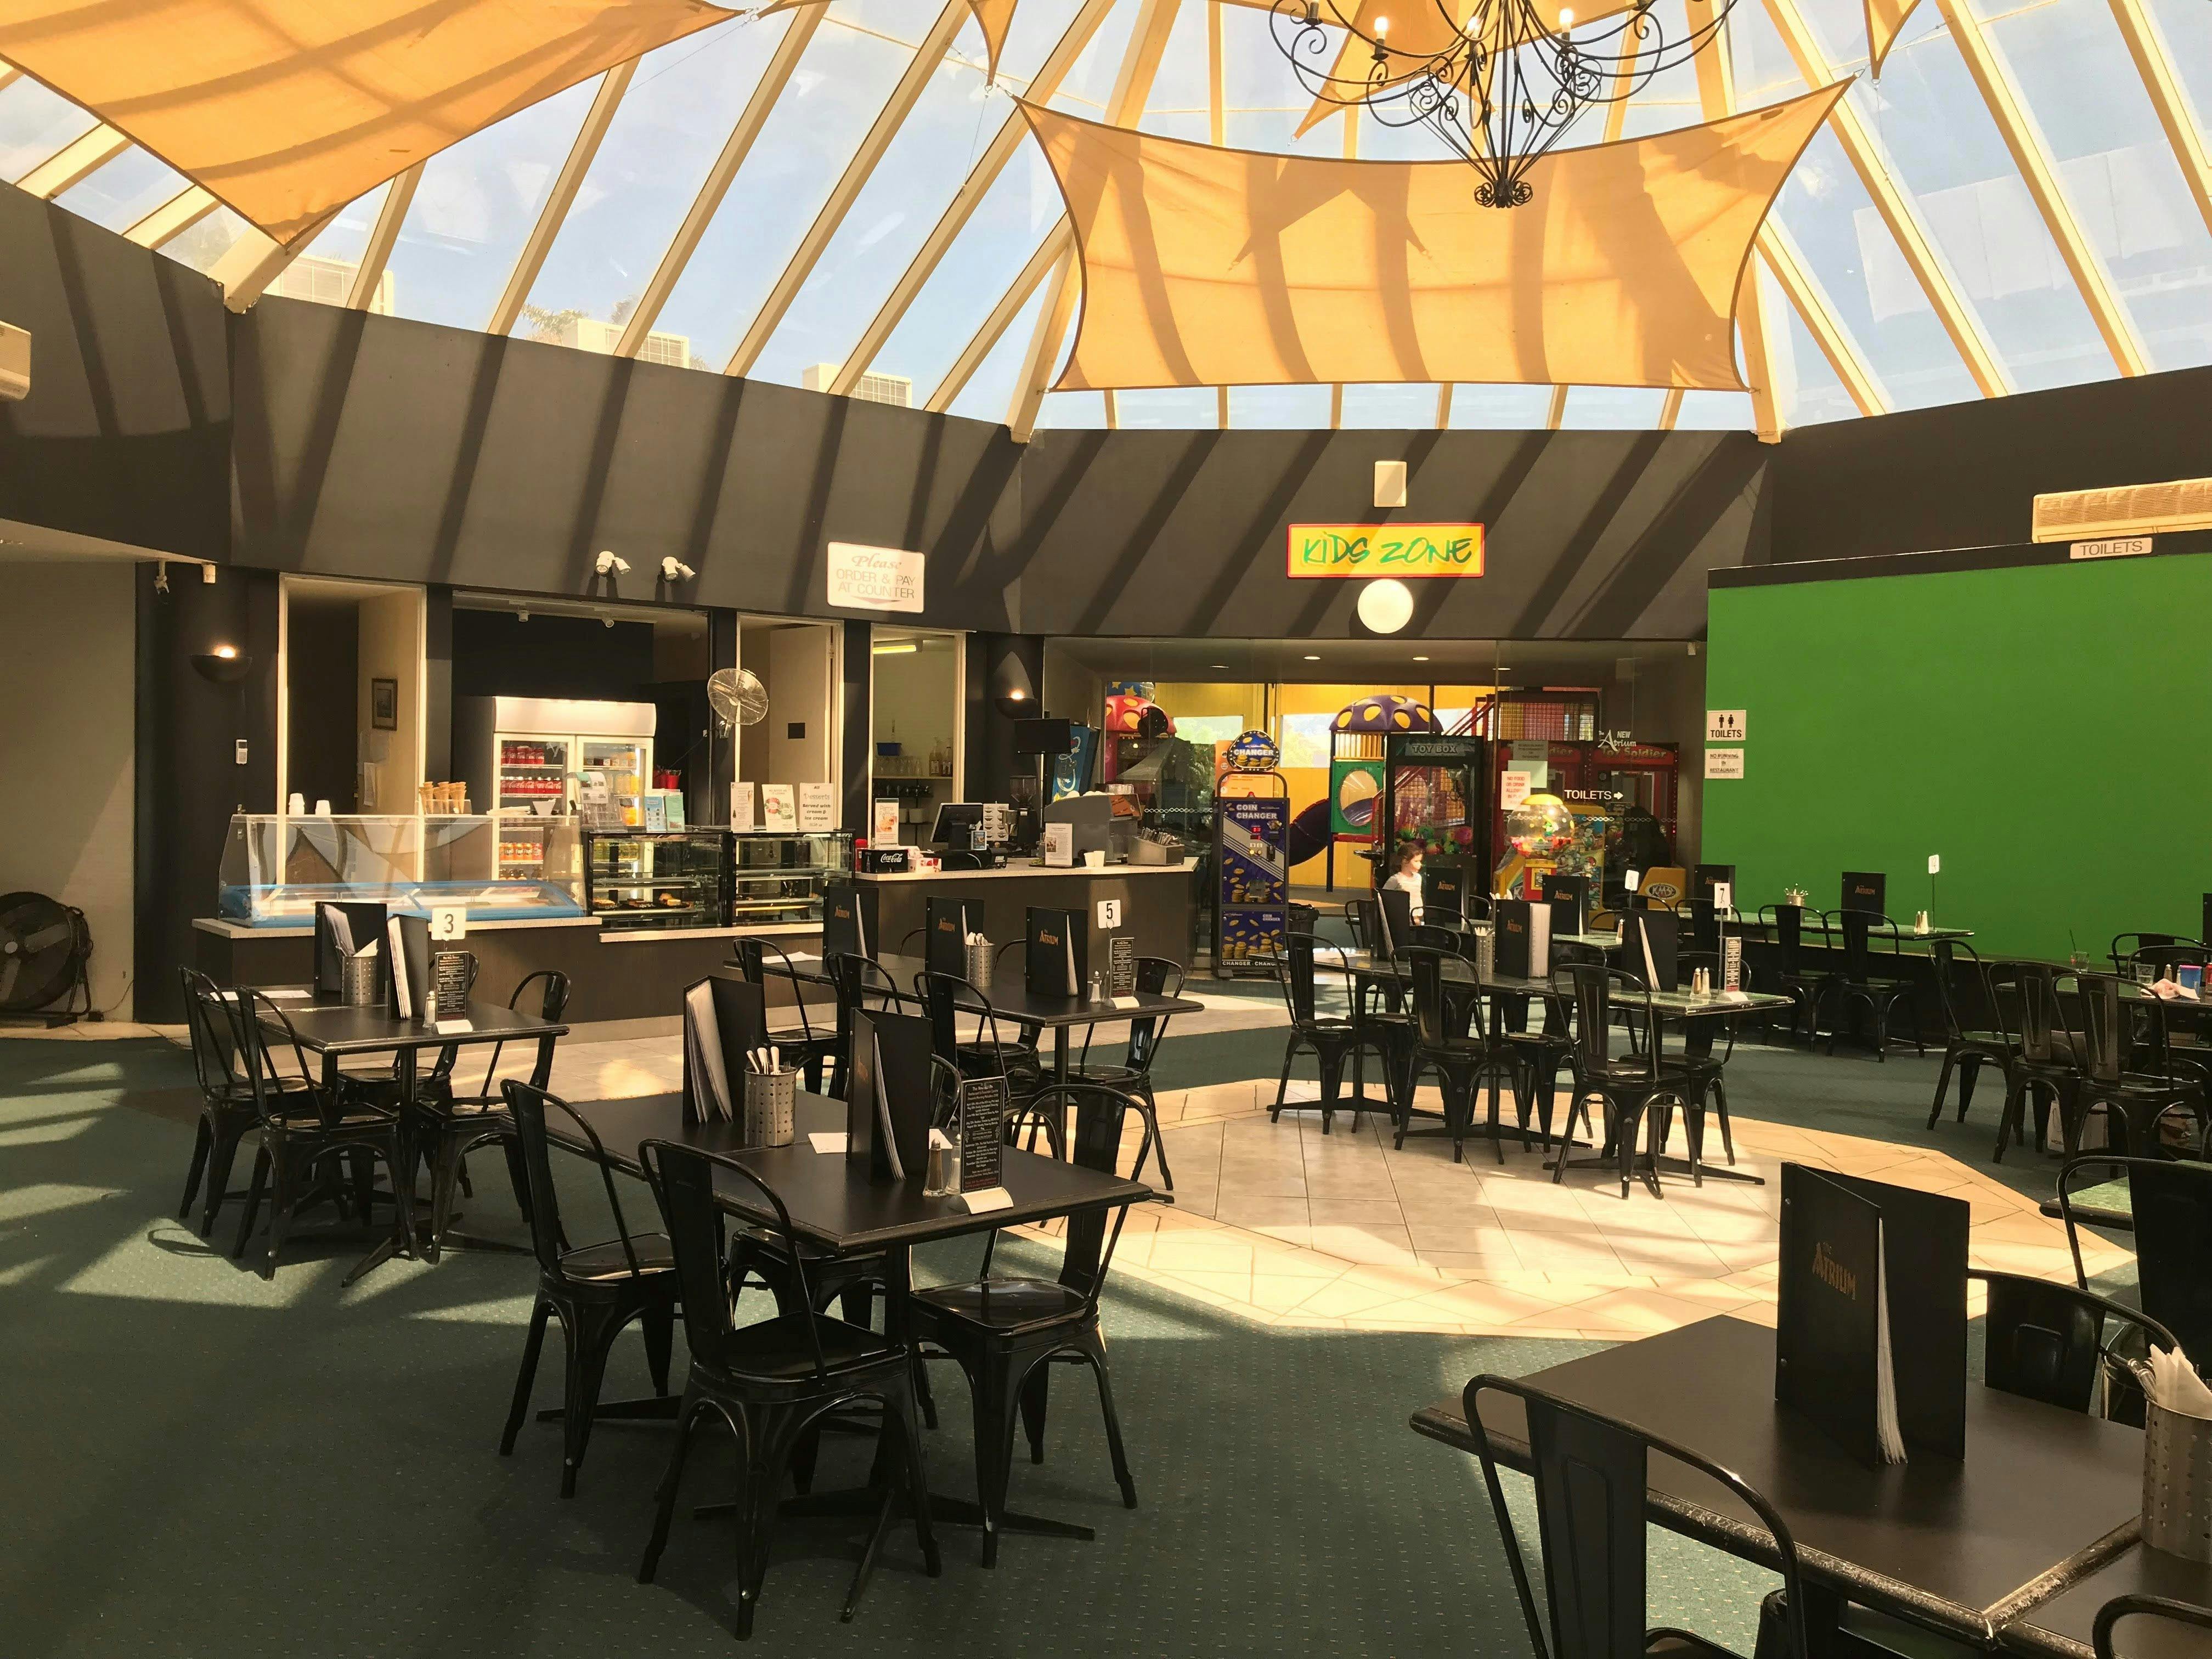 The New Atrium Restaurant and Function Centre